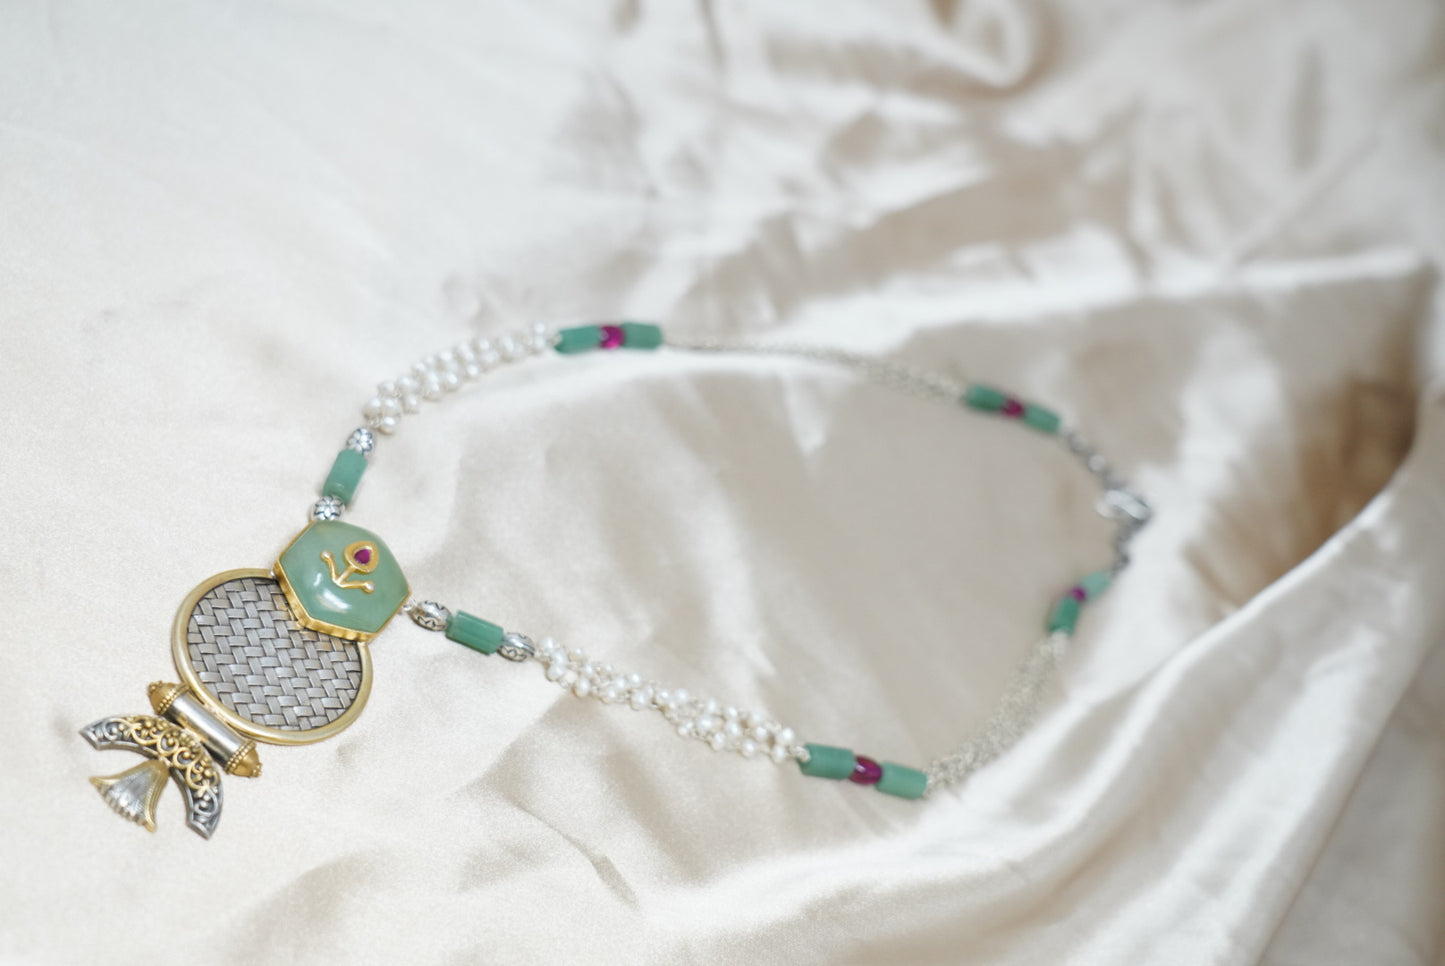 Sea Green Handmade Pearl Beads Necklace